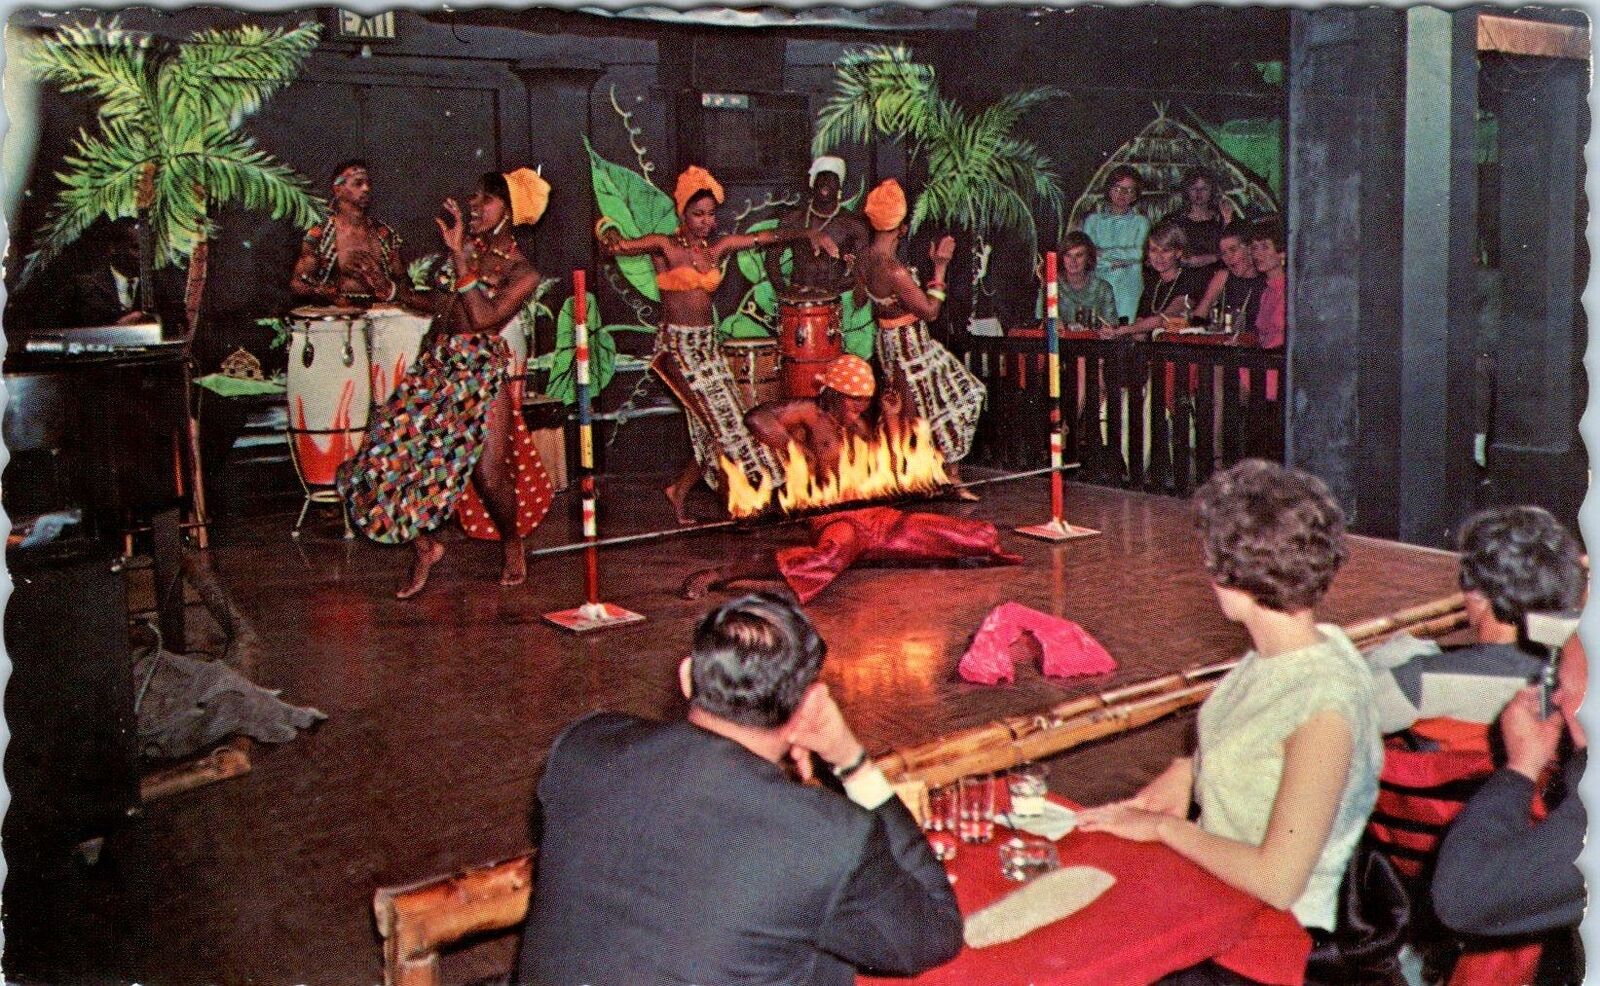 HAMILTON, Bermuda  LIMBO DANCERS Perform at JUNGLE ROOM  1968  Roadside Postcard